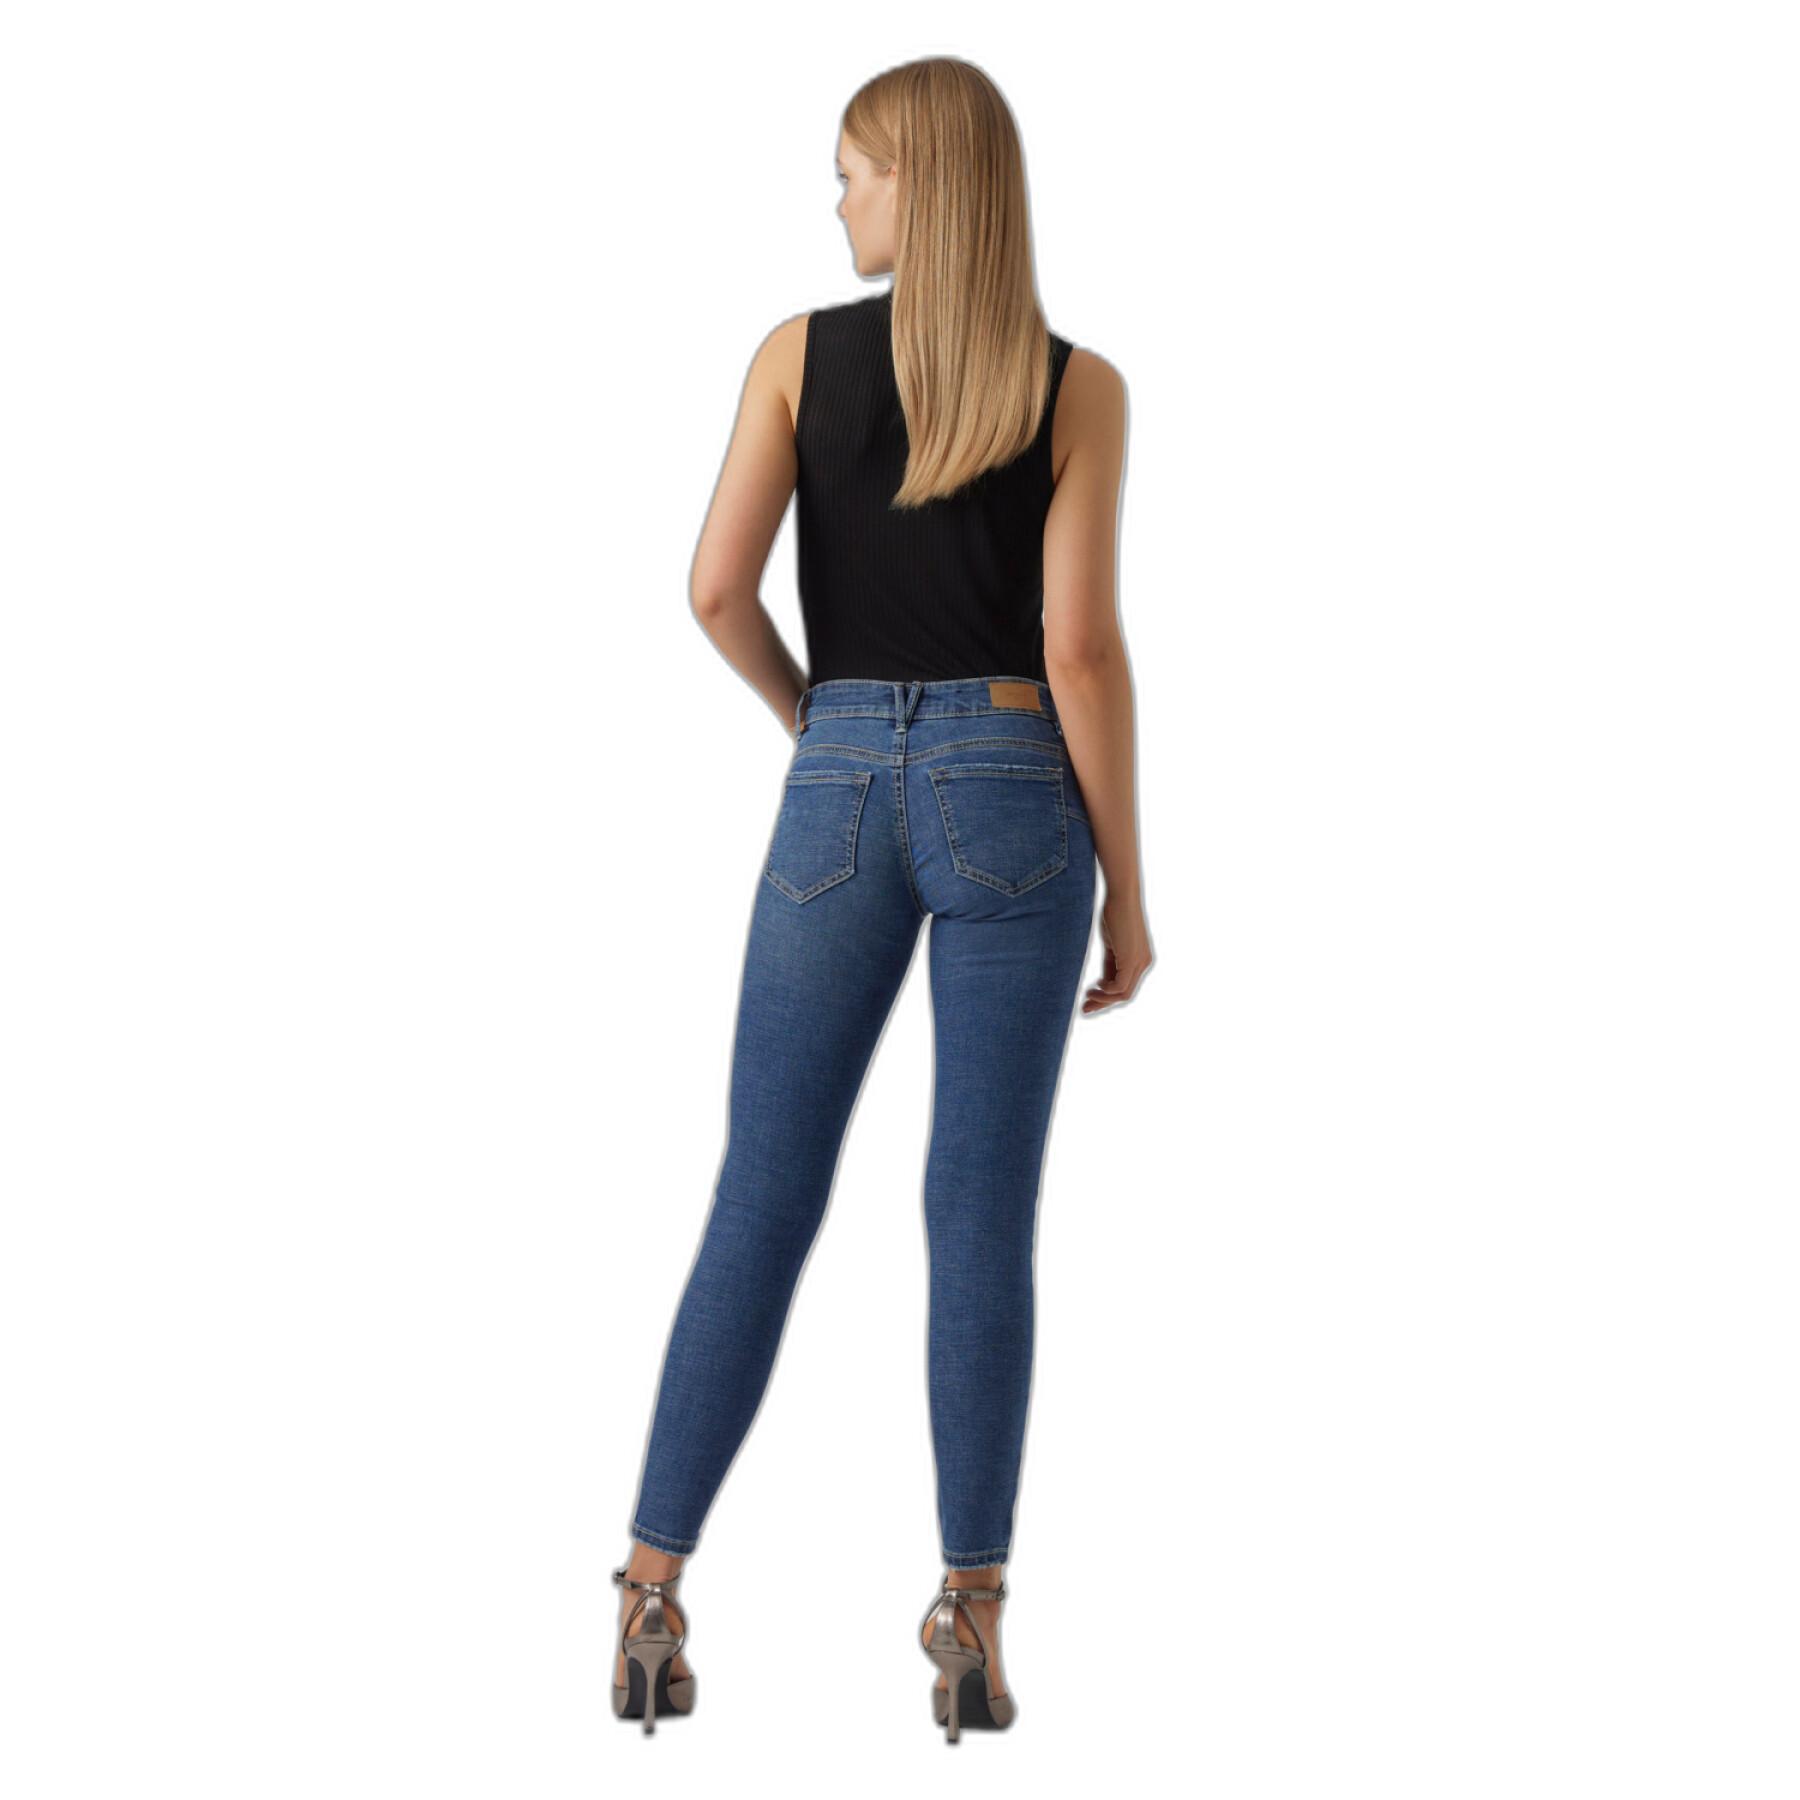 Jeans skinny woman Vero Moda Robyn LR Push Up LI399